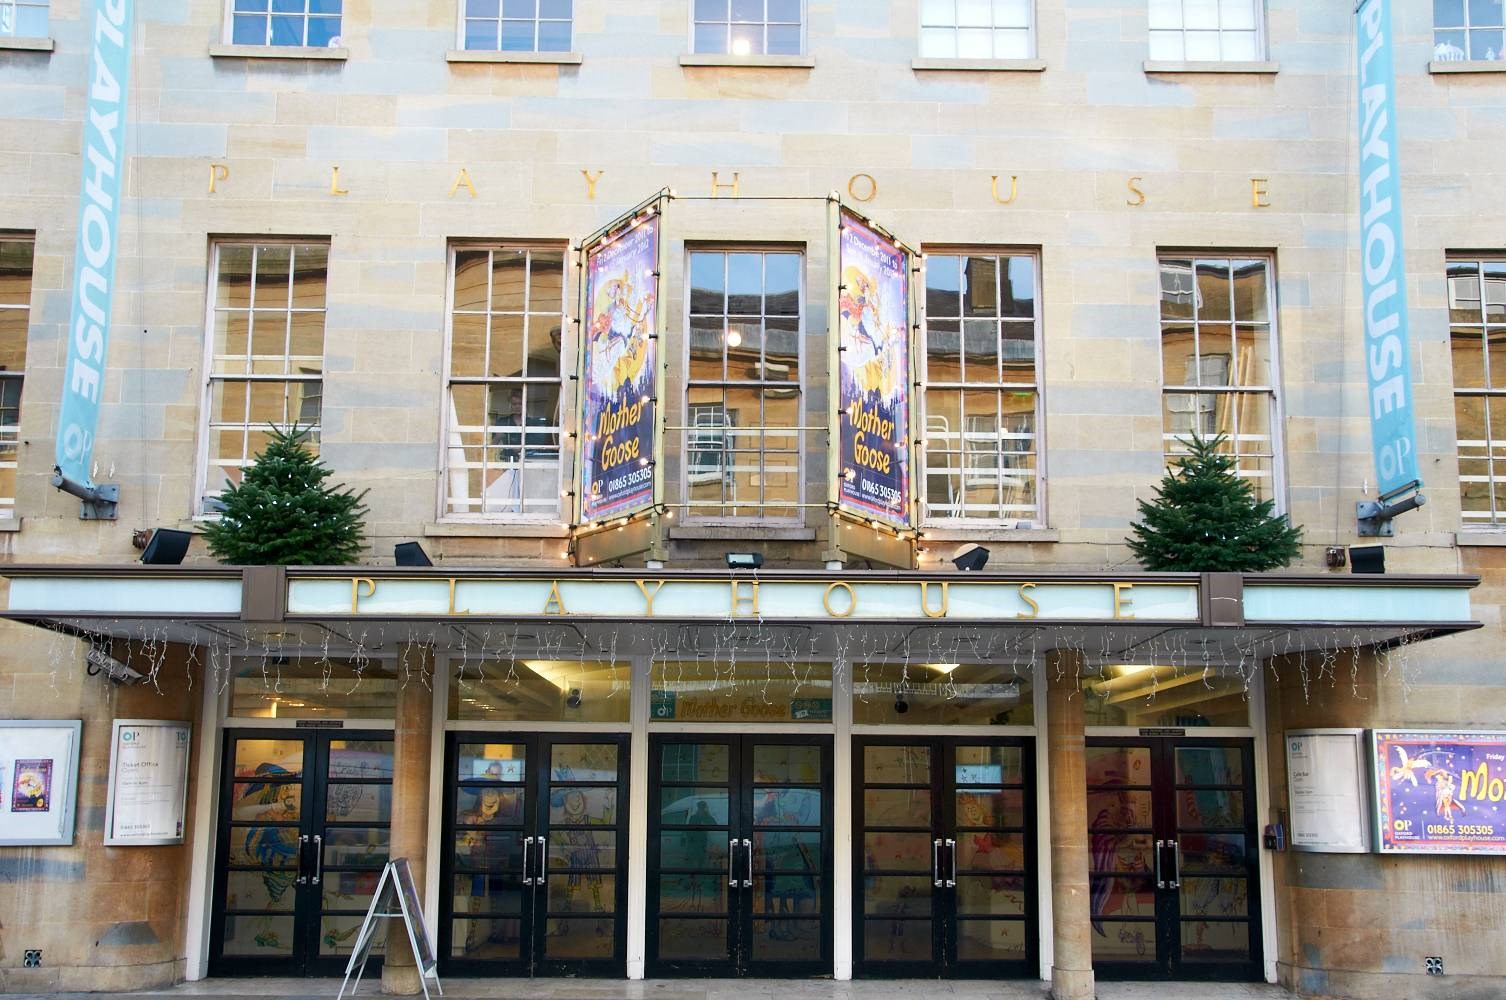 Oxford Playhouse, Oxford